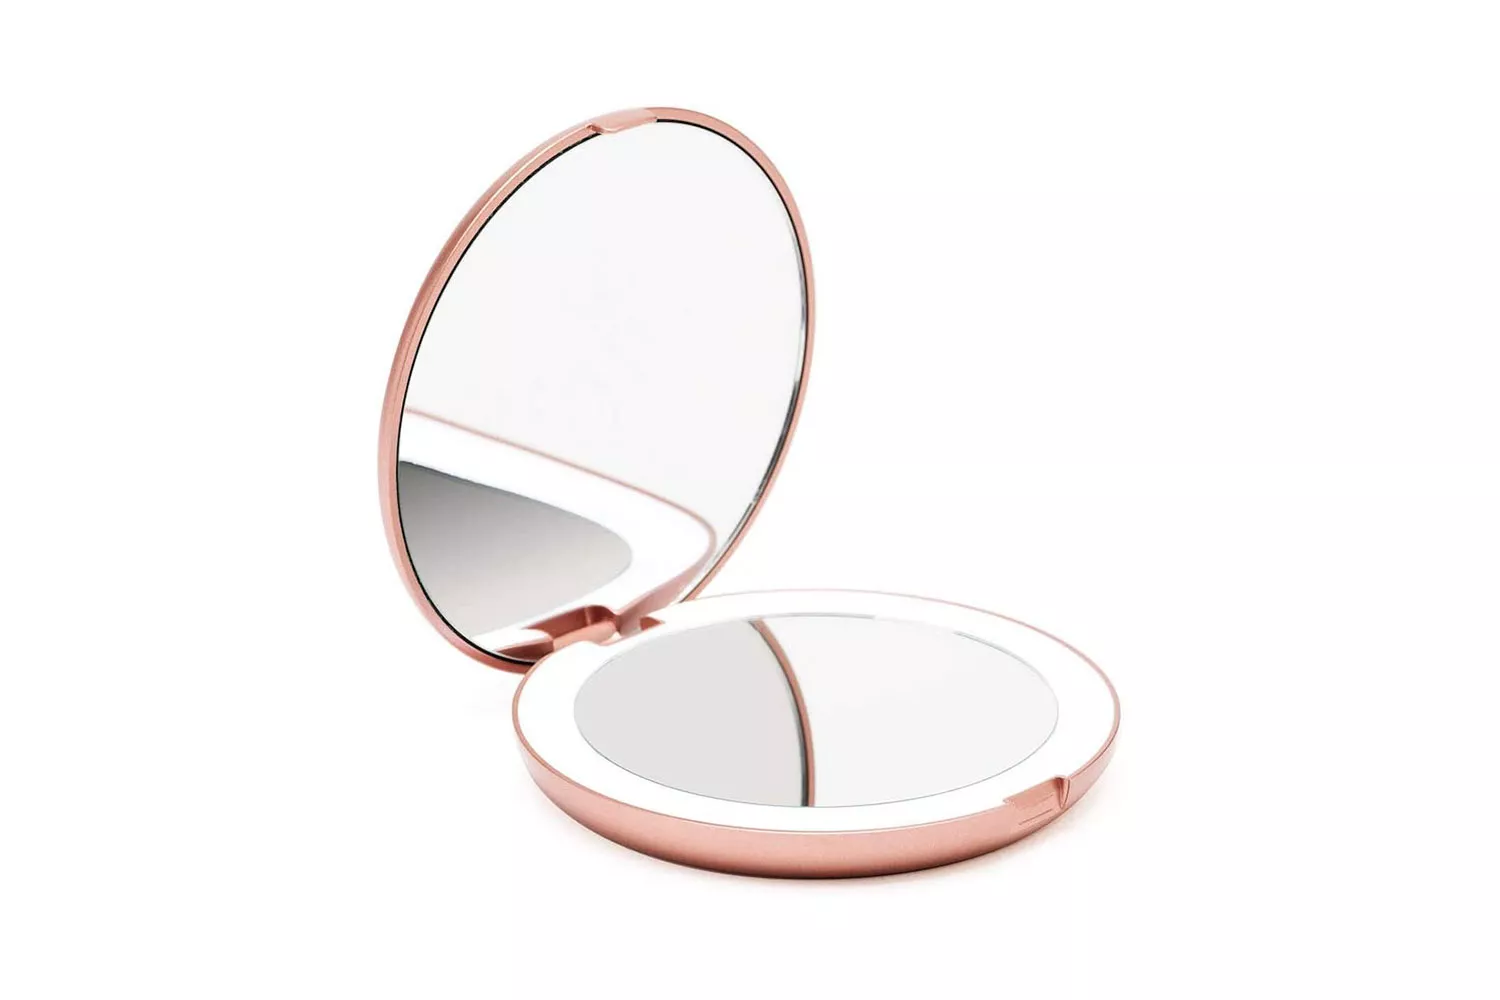 Fancii-led-lighted-travel-makeup-mirror